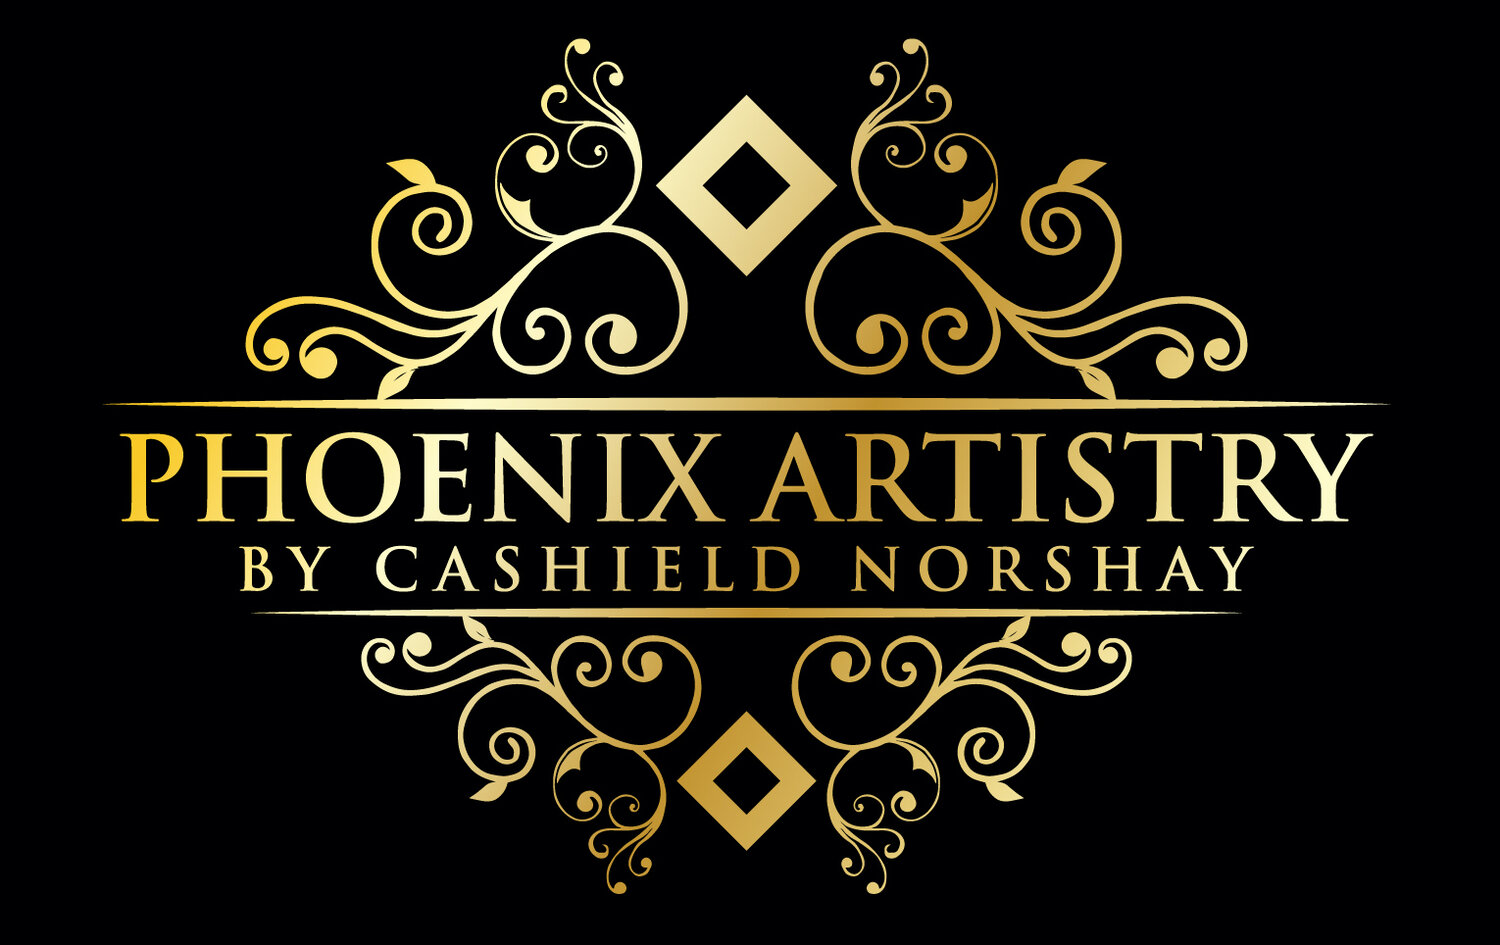 Phoenix Artistry by Cashield Norshay